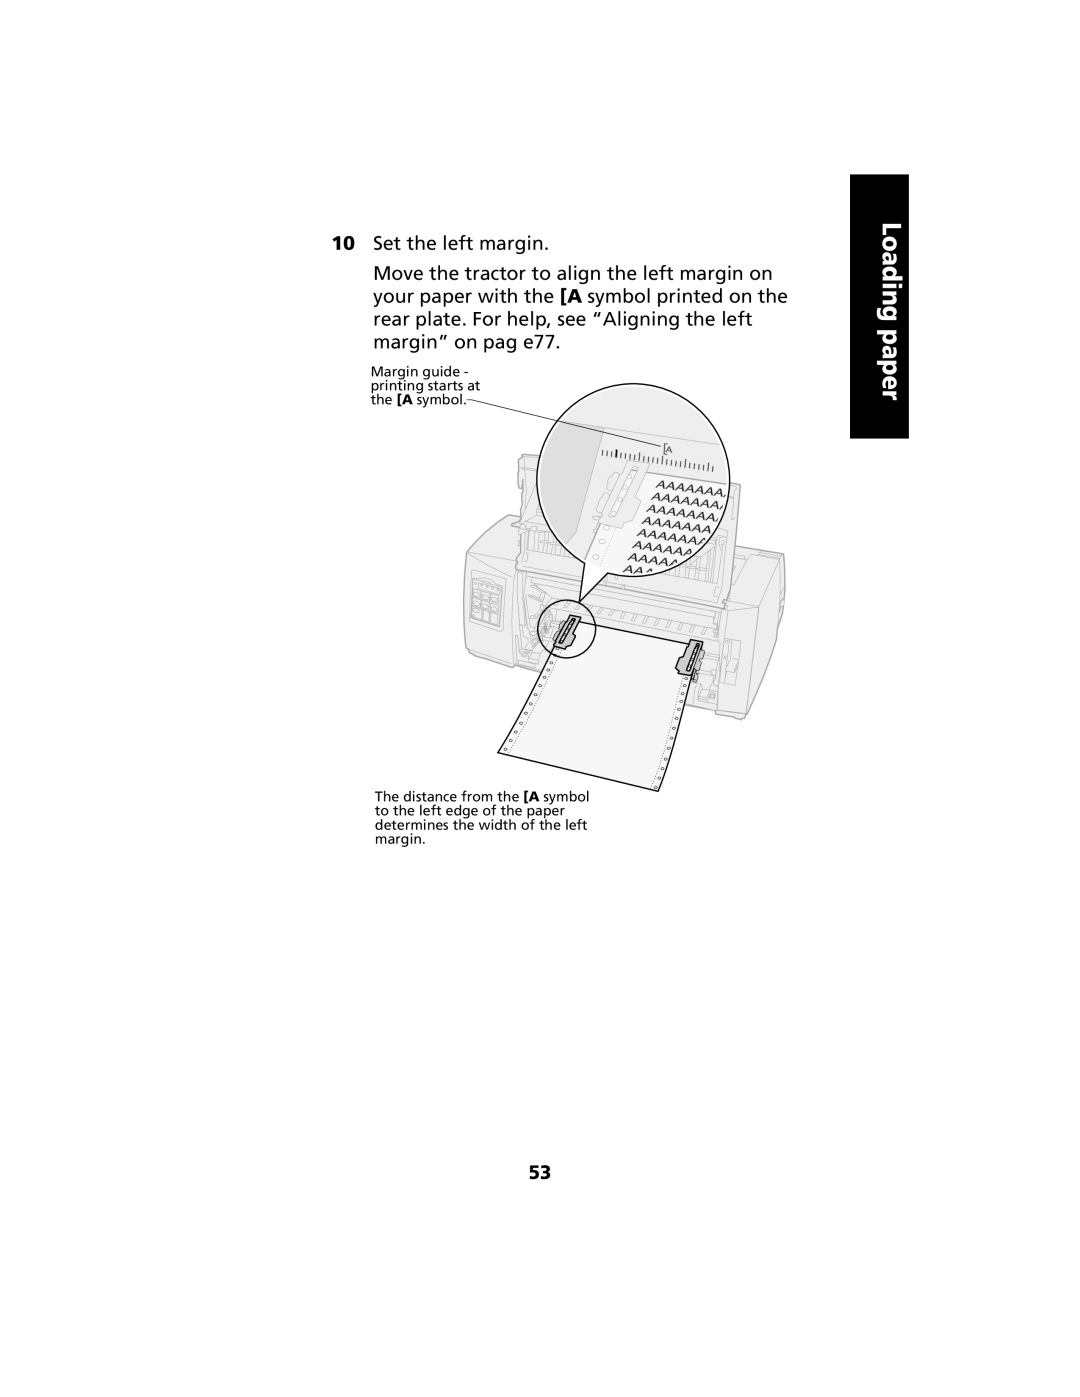 Lexmark 2480 manual Loading paper, Set the left margin, Margin guide - printing starts at the A symbol 